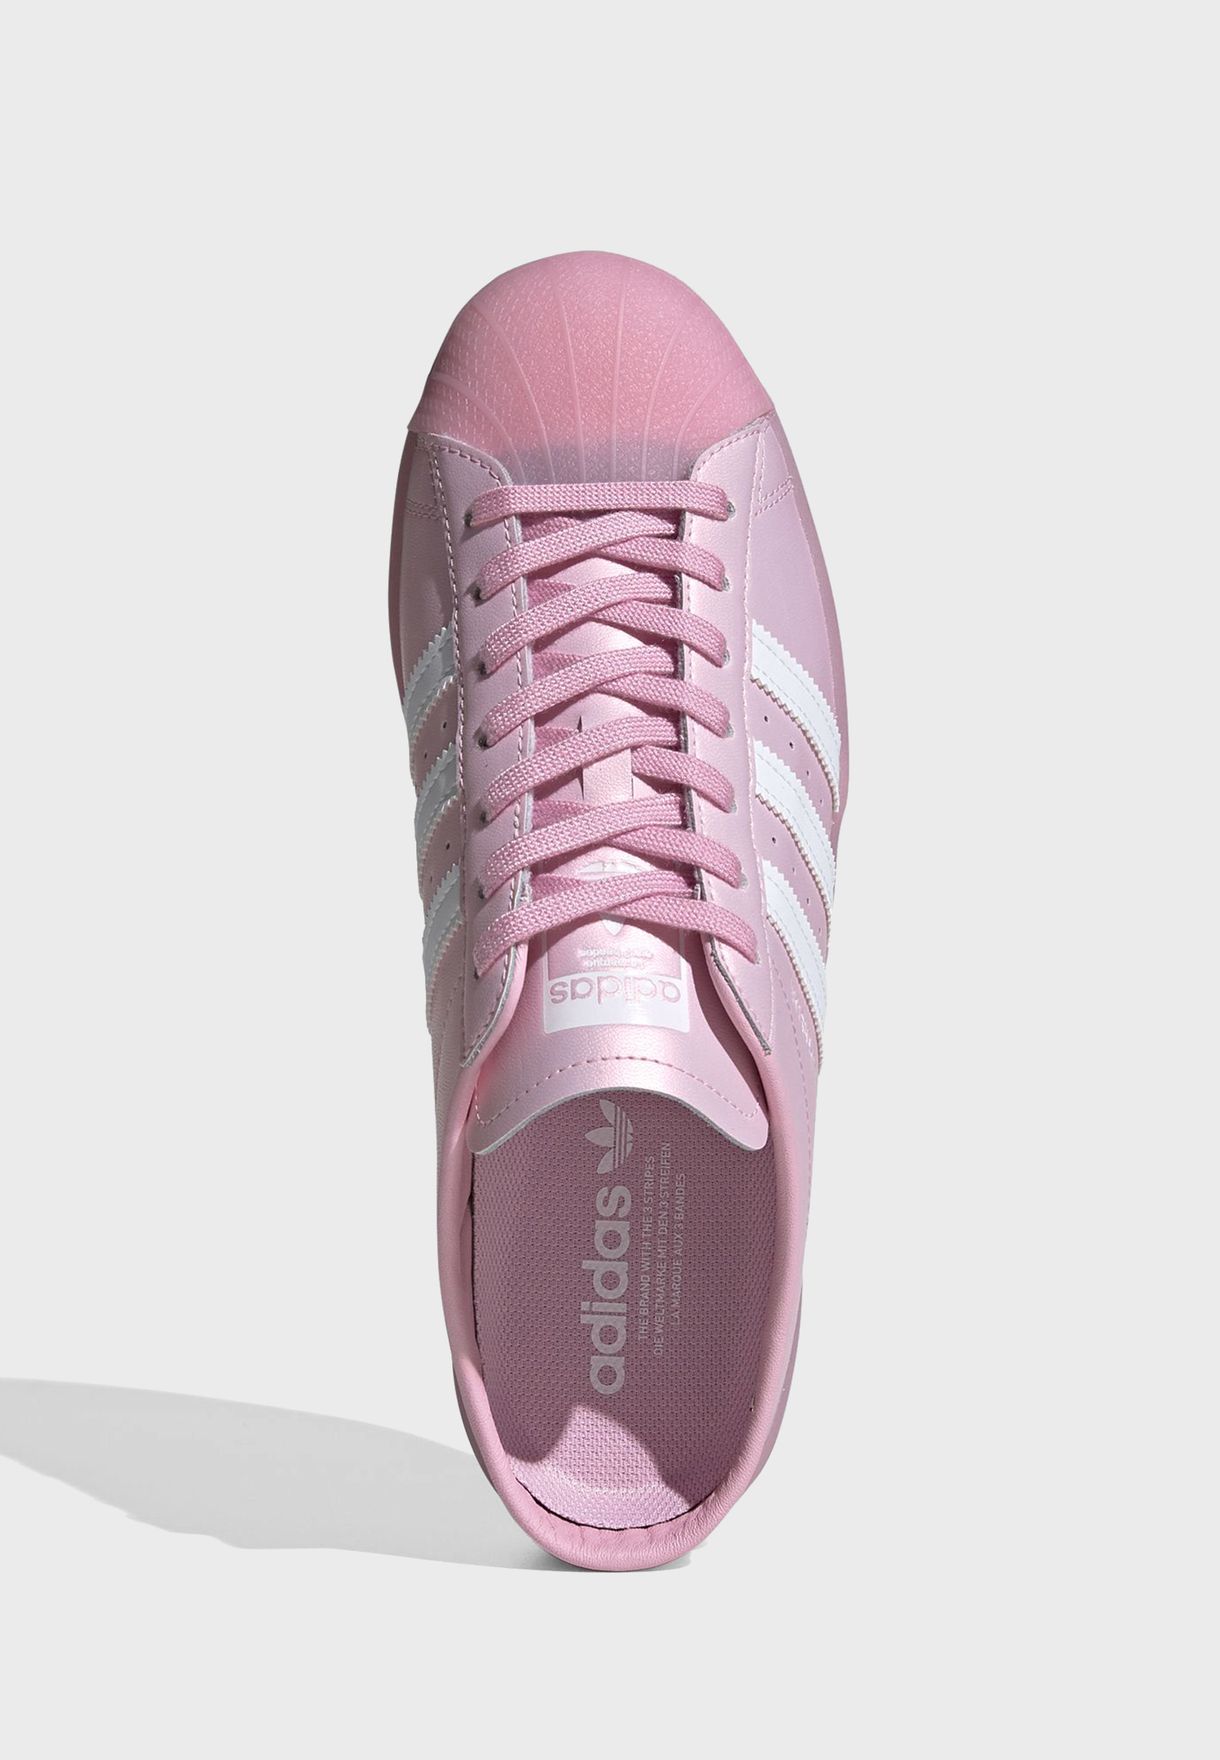 adidas superstar mule pink